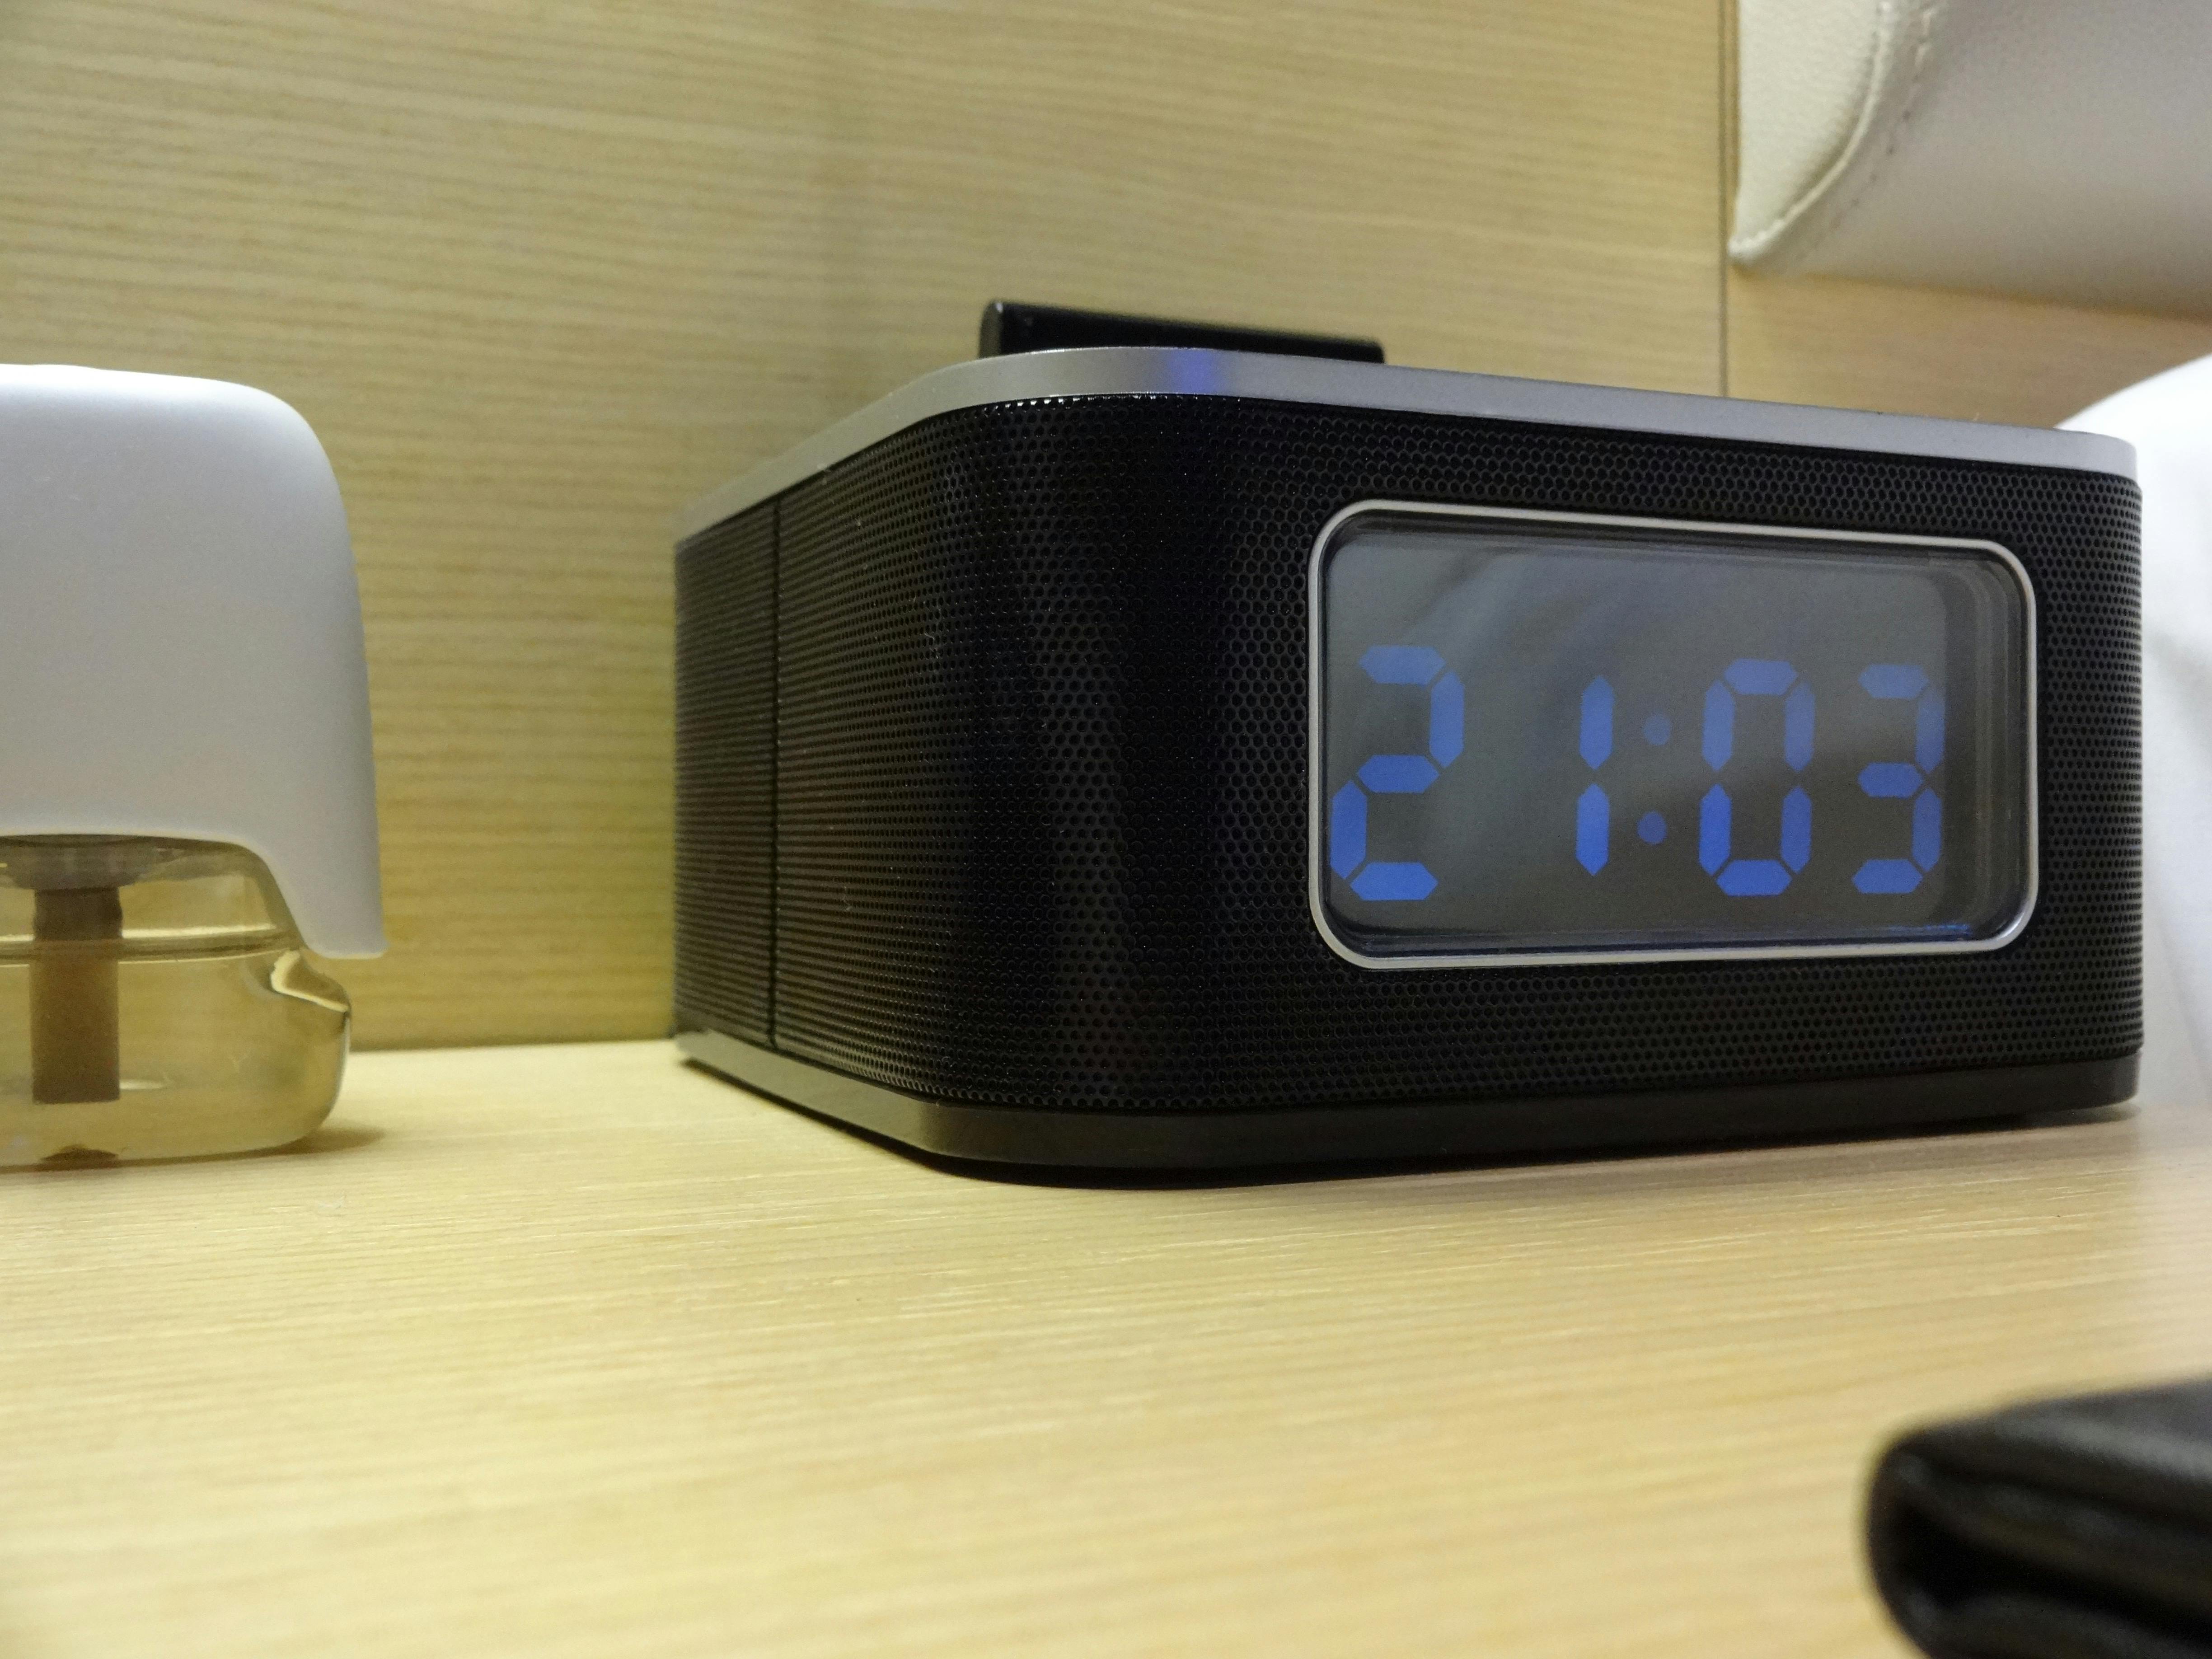 Free stock photo of alarm clock, clock, hotel room